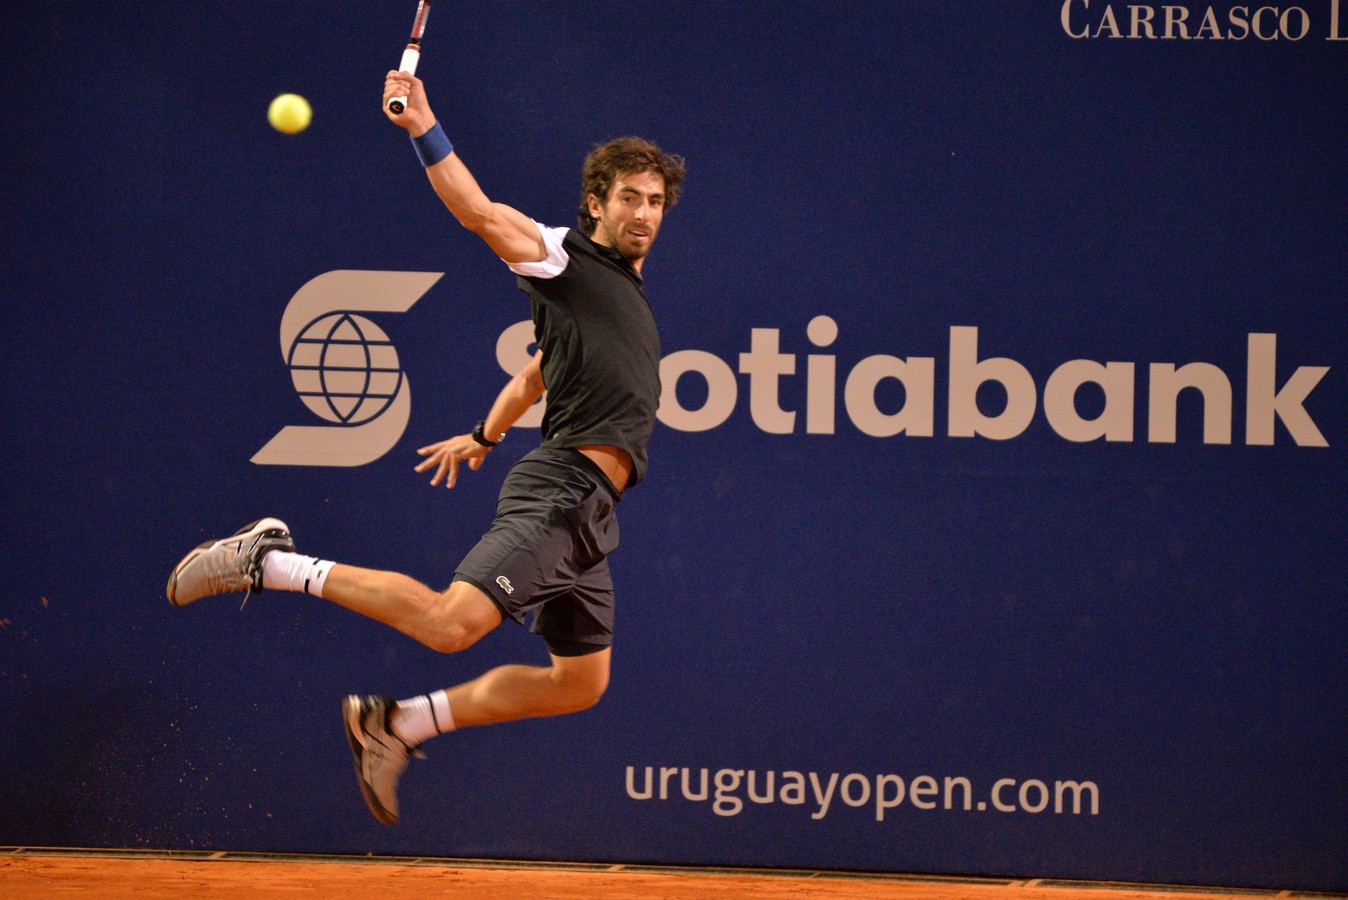 Foto: Uruguay Open